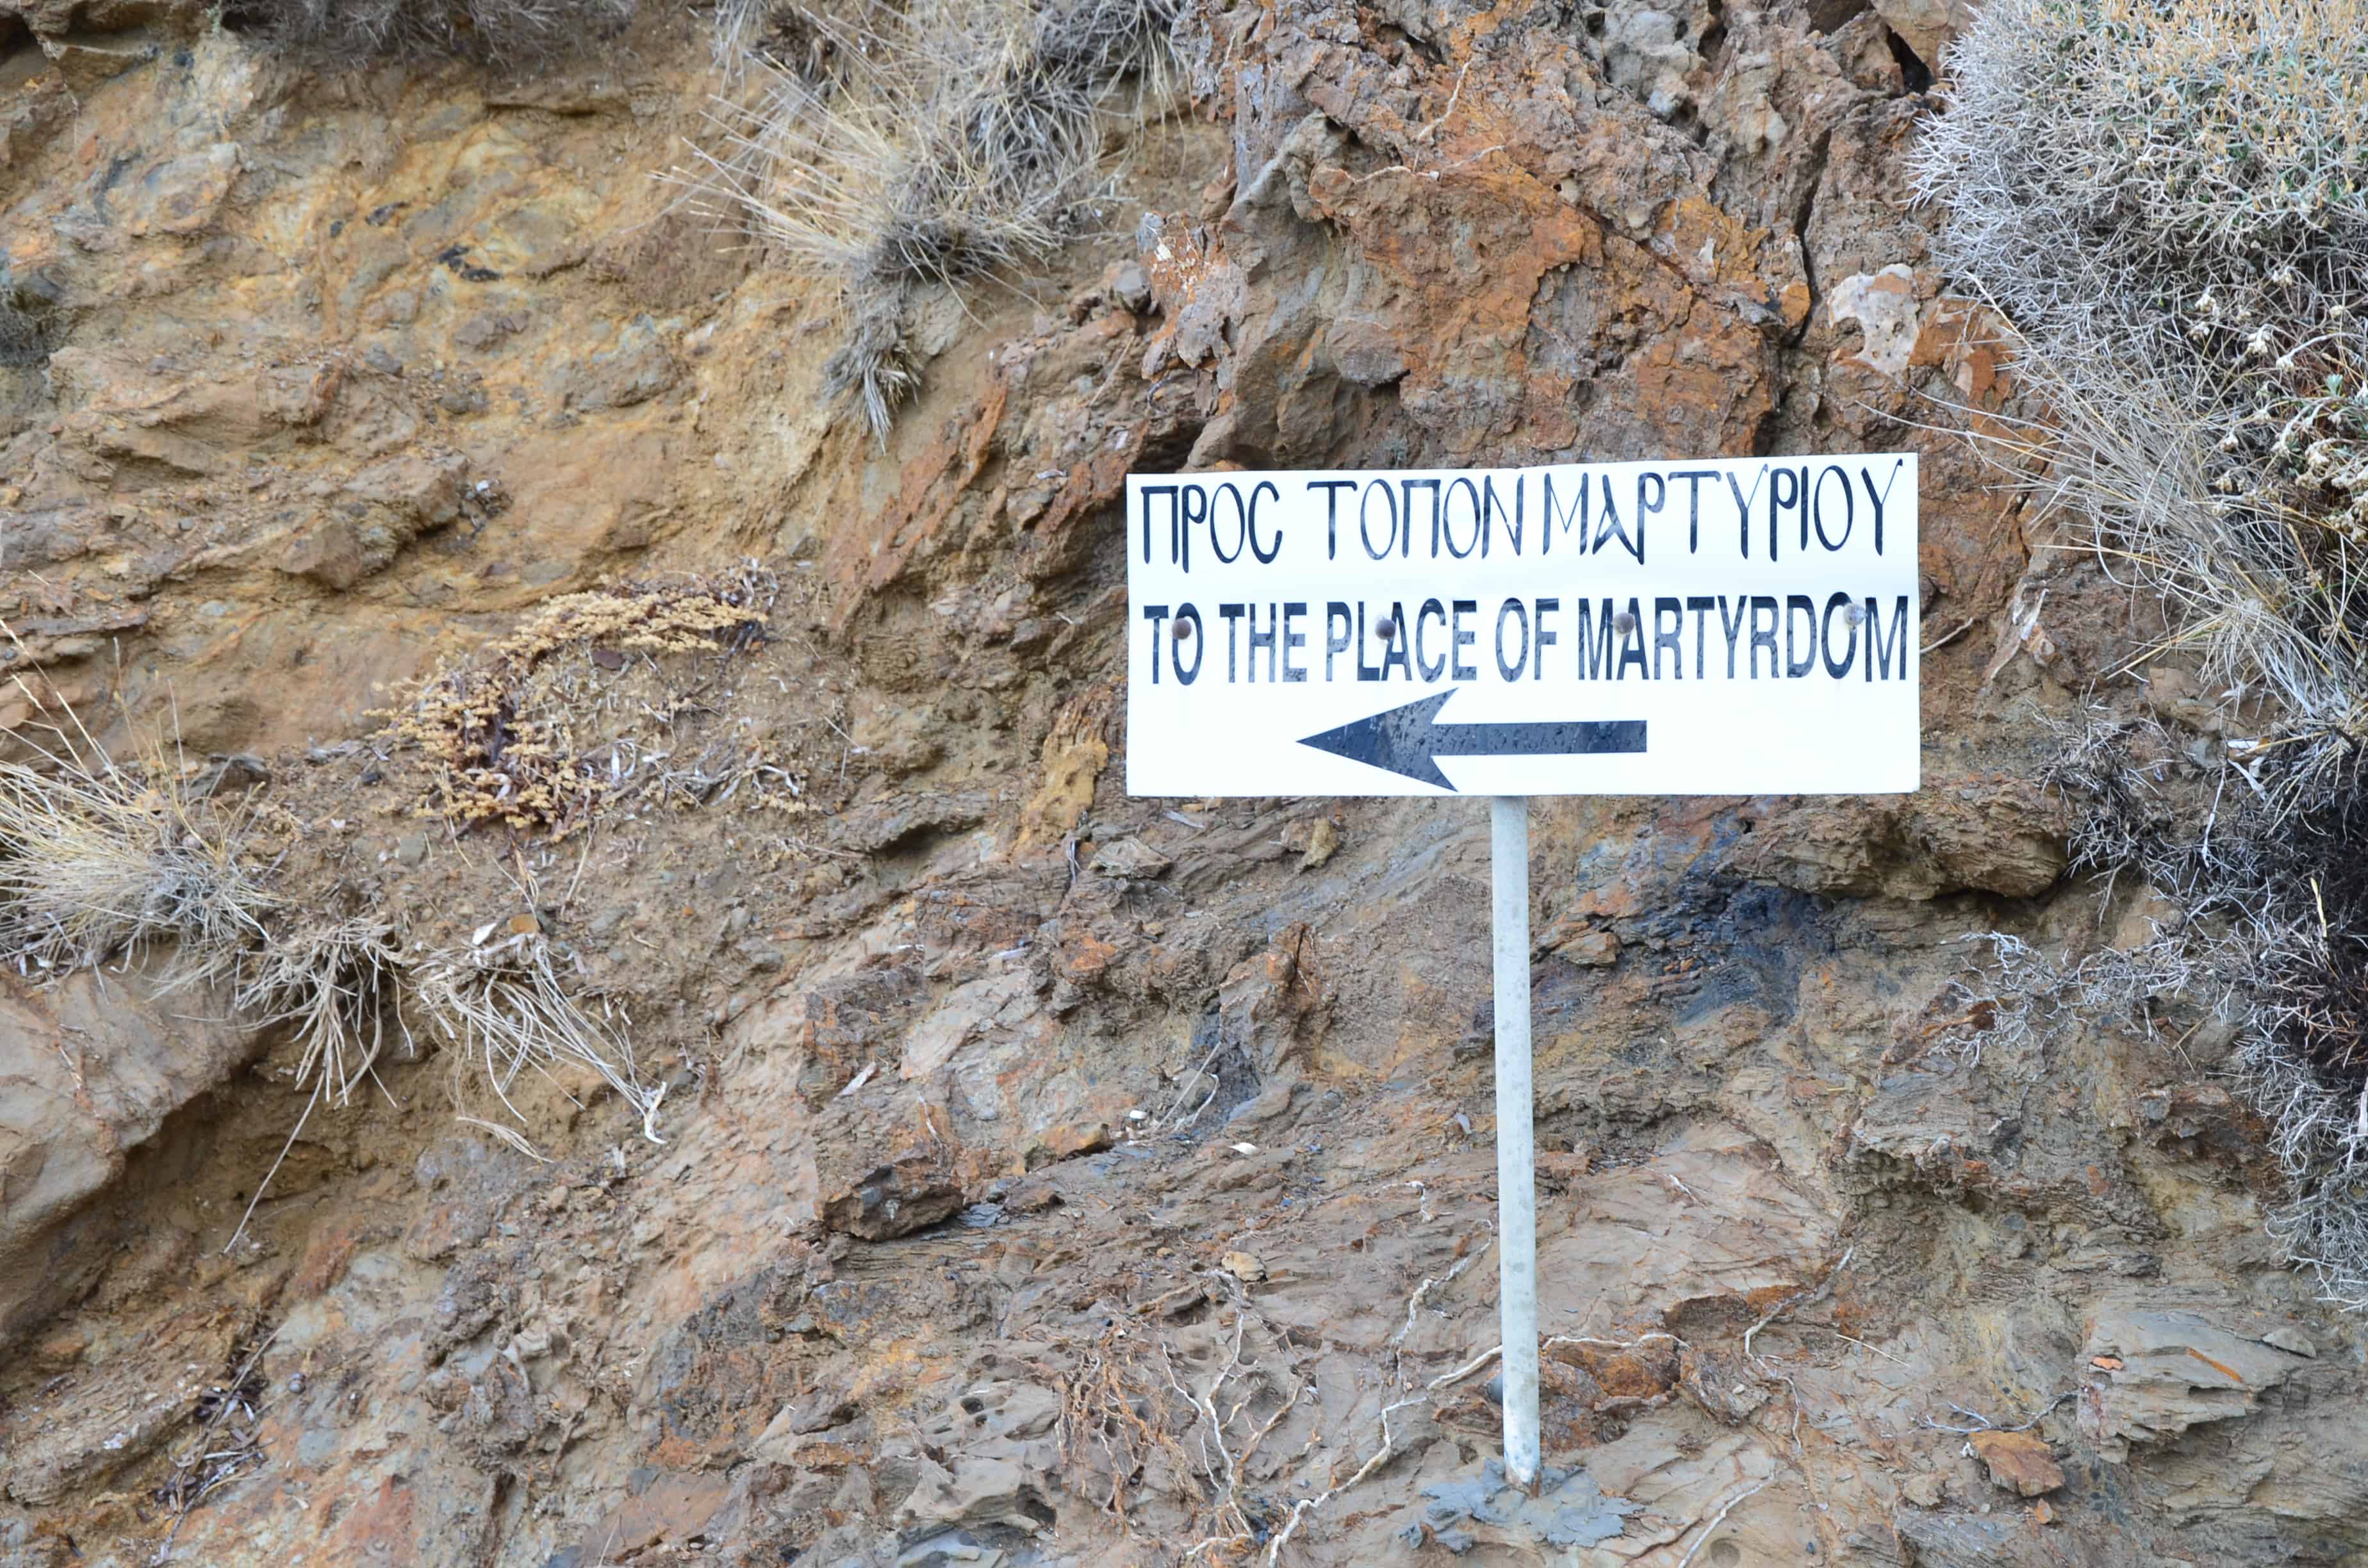 Path to St. Markella martyrdom site in Chios, Greece